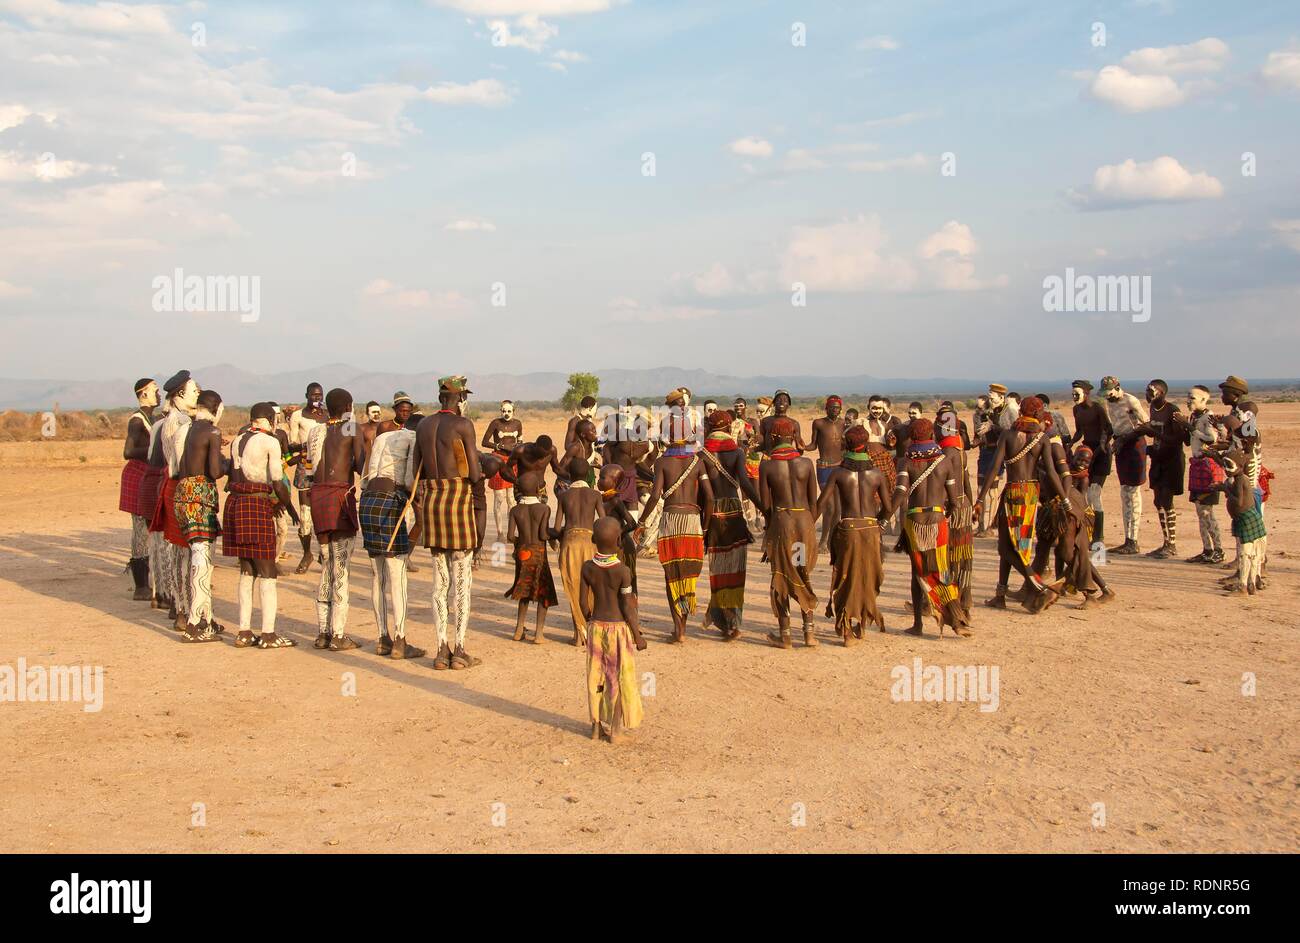 Nyangatom, Bumi, tribal dance ceremony, Omo river Valley, Ethiopia, Africa Stock Photo